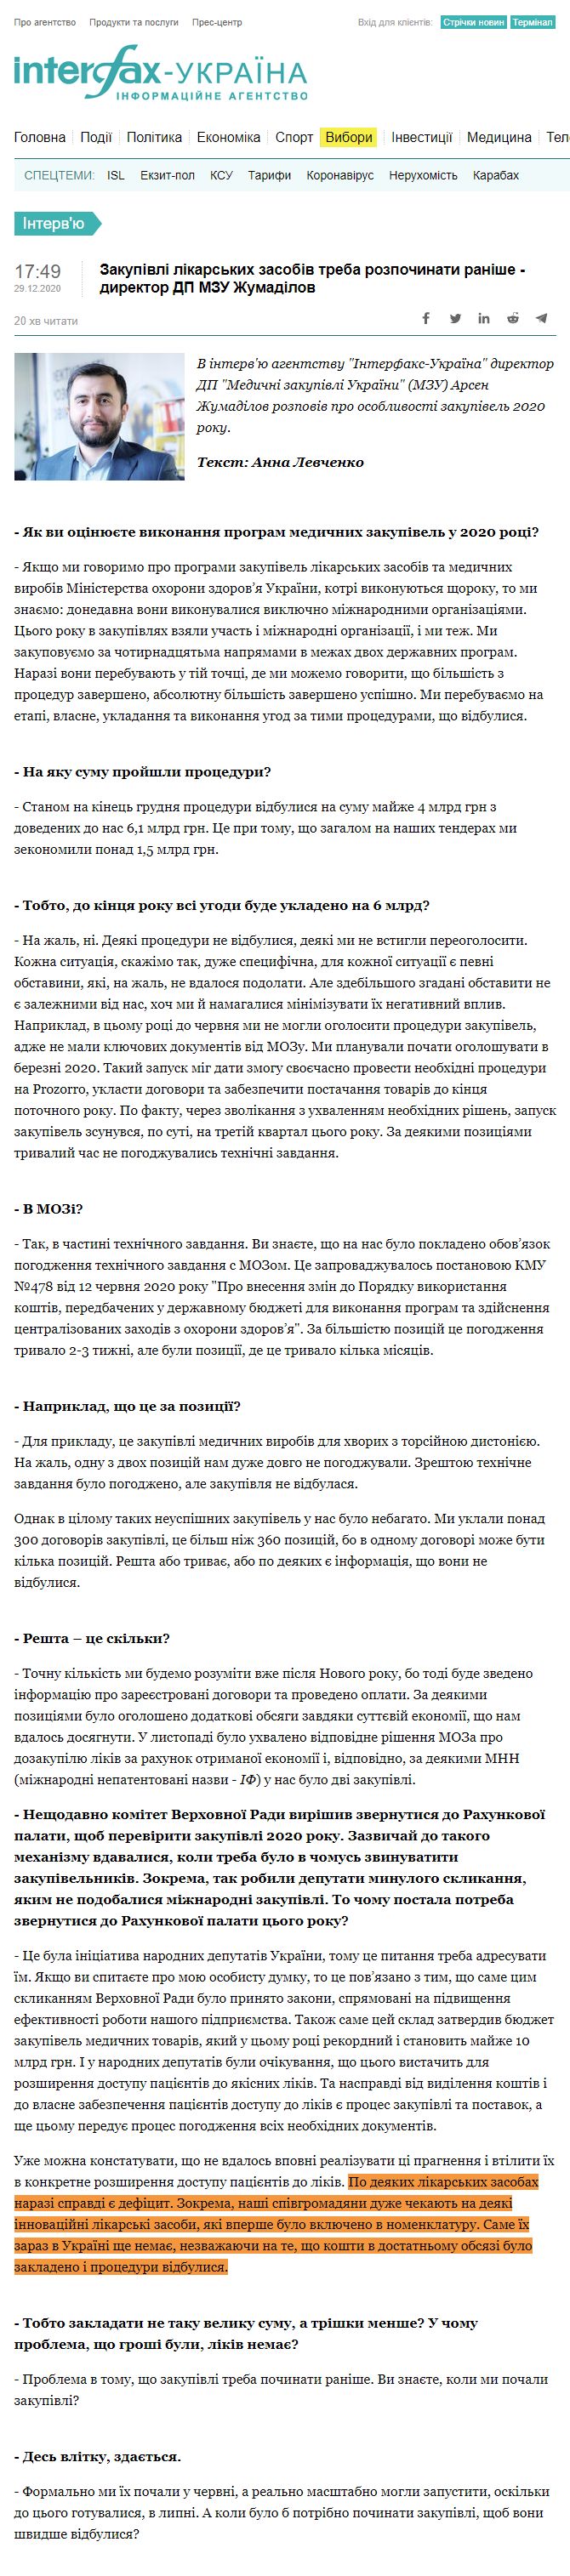 https://ua.interfax.com.ua/news/interview/713301.html